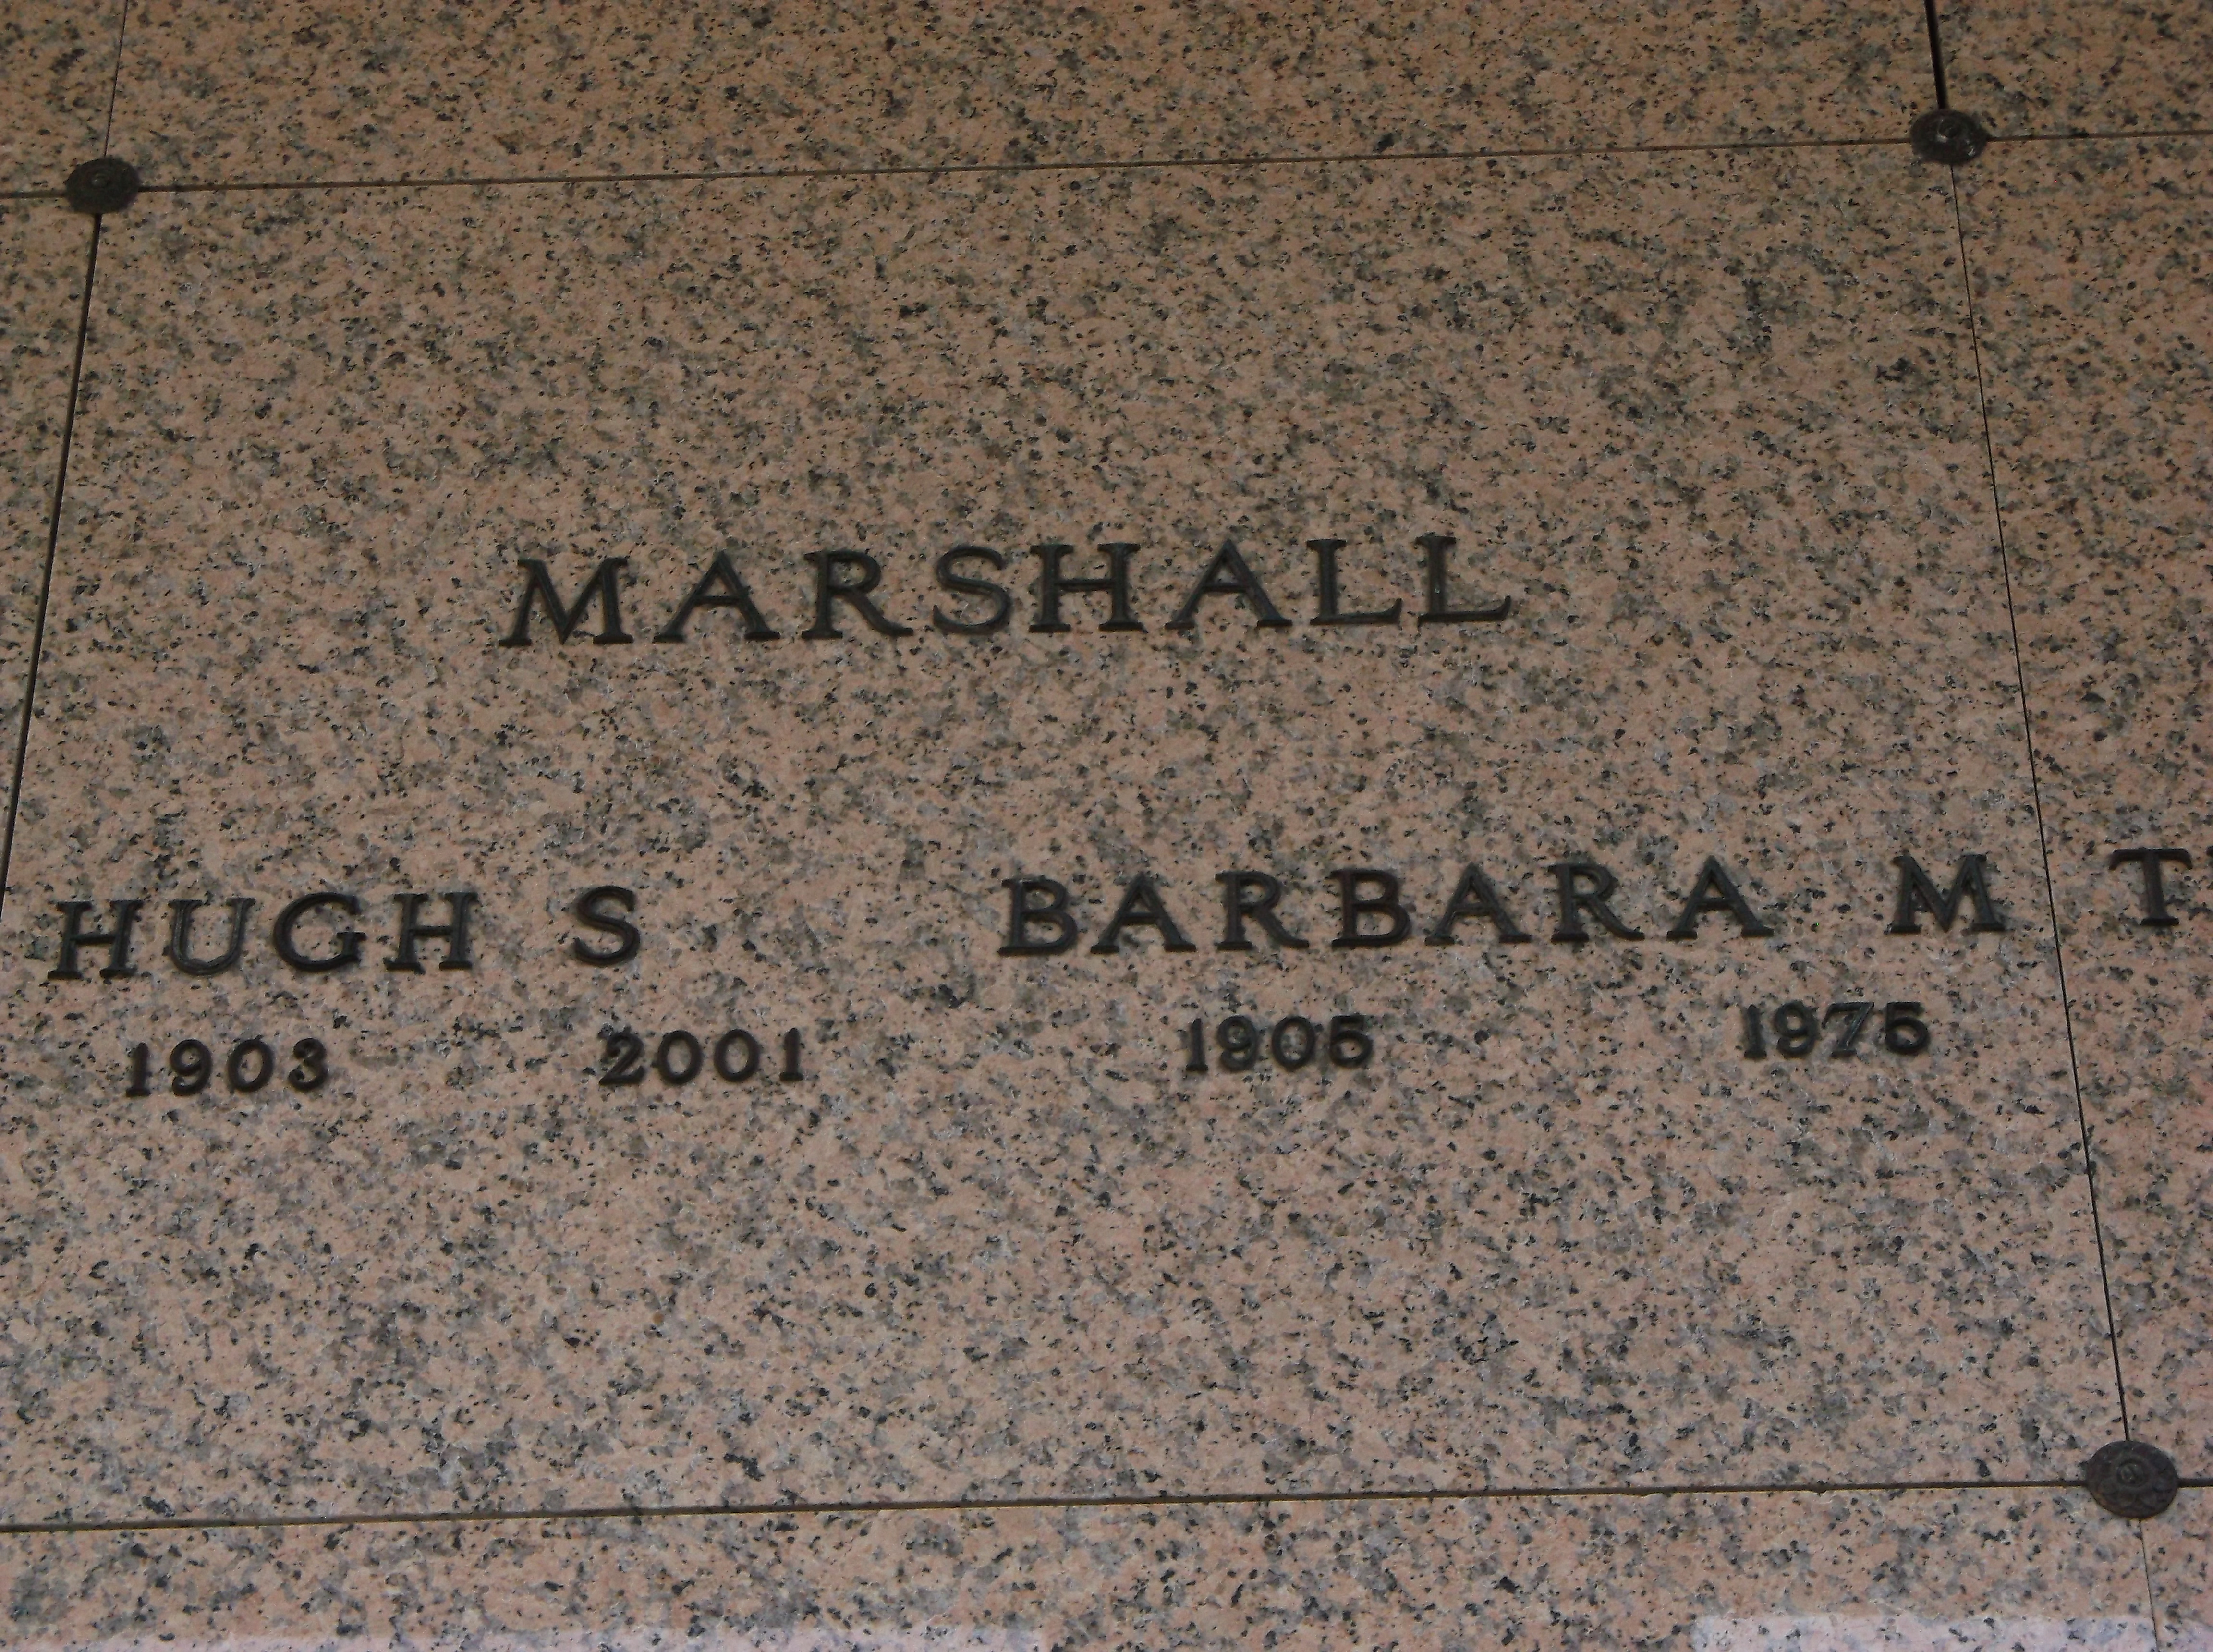 Barbara M Marshall